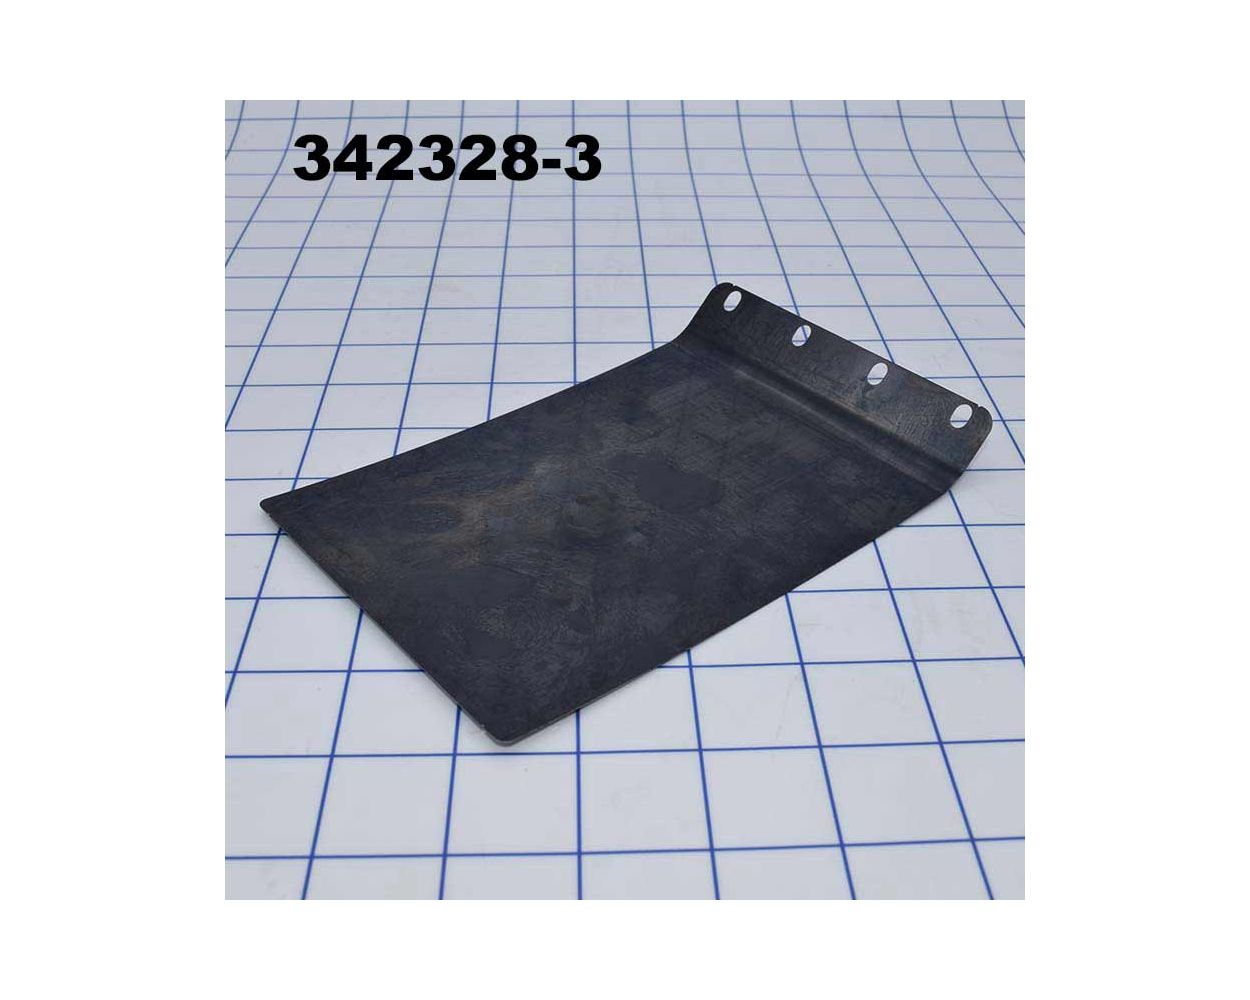 MAKITA Spare Part Model Number 342328-3 Steel Plate Sanding Abrasive 9401 9402 